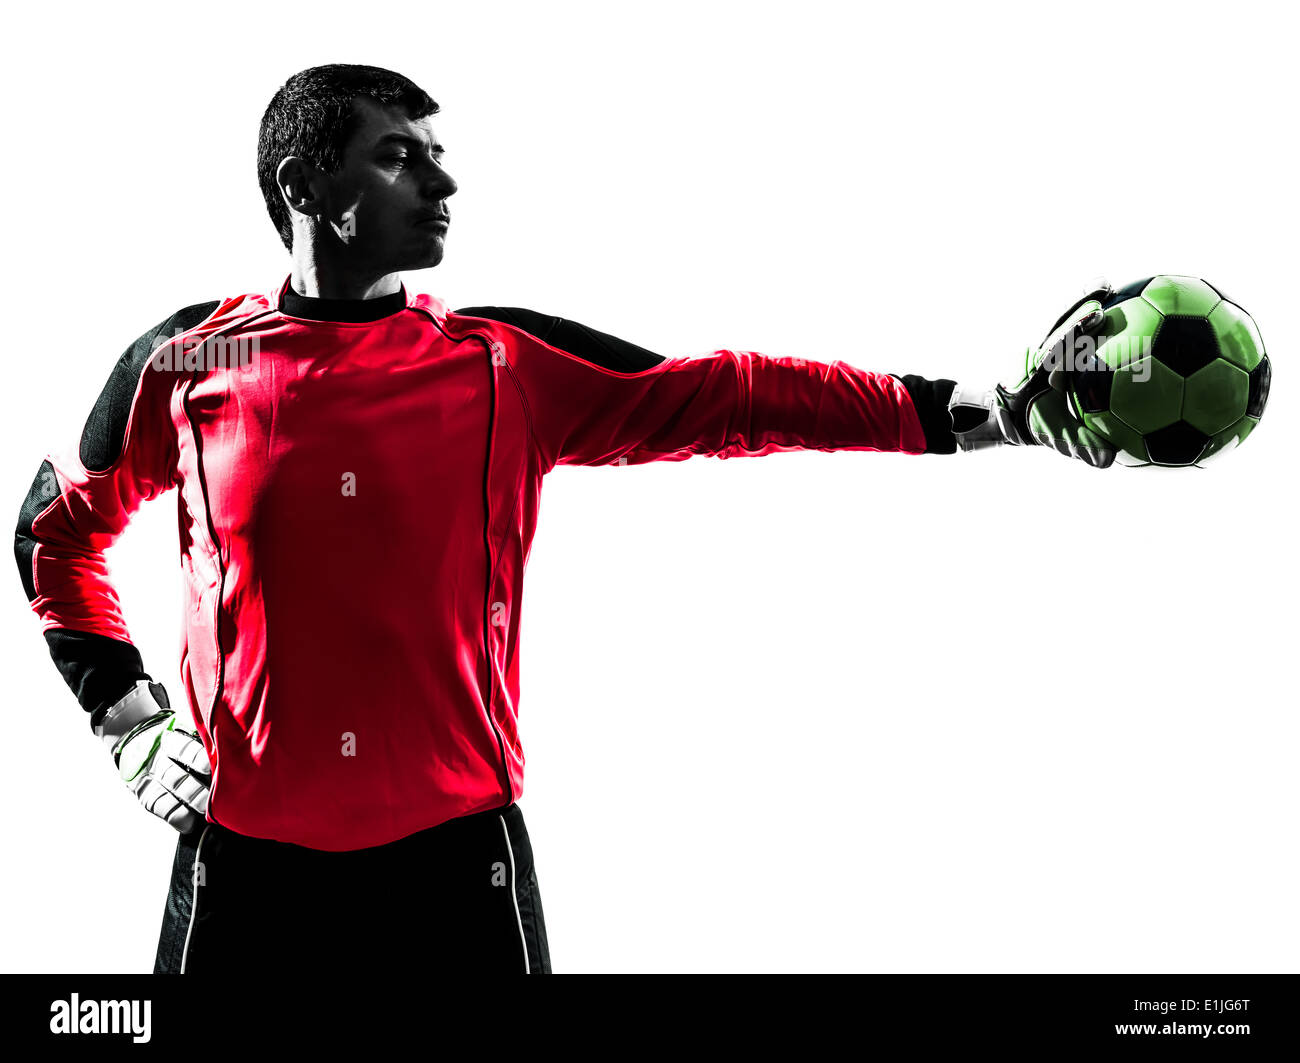 https://c8.alamy.com/comp/E1JG6T/one-soccer-player-goalkeeper-man-standing-stopping-ball-with-one-hand-E1JG6T.jpg